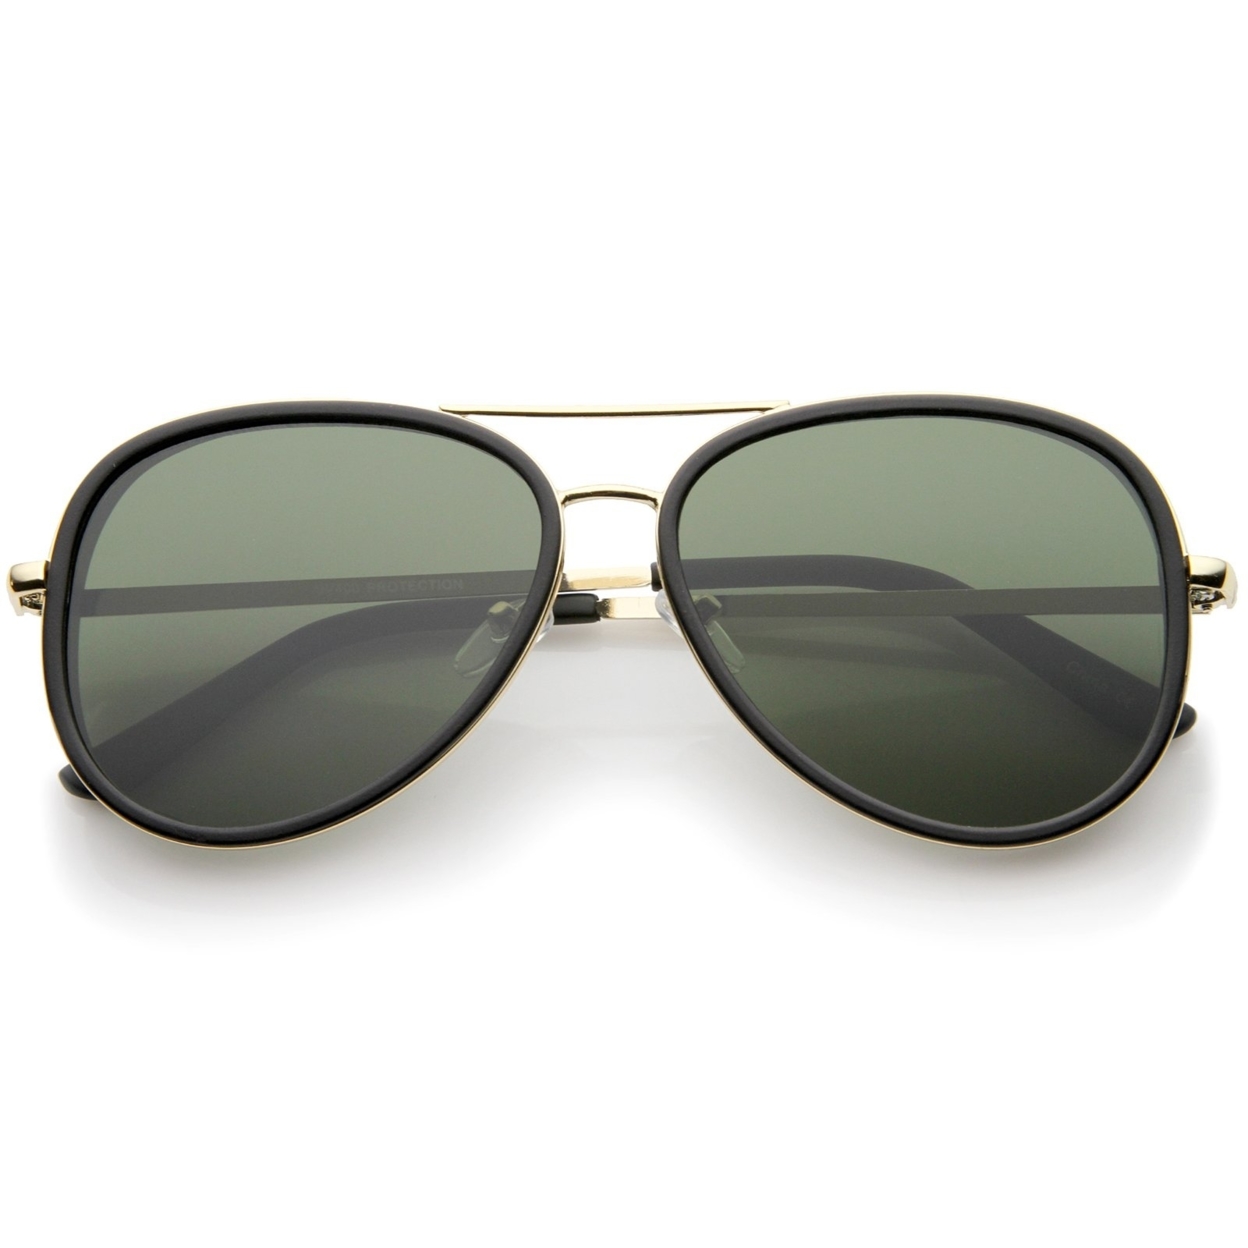 Retro Fashion Side Cover Flat Lens Two-Tone Metal Aviator Sunglasses 53mm - Brown-Gold / Green